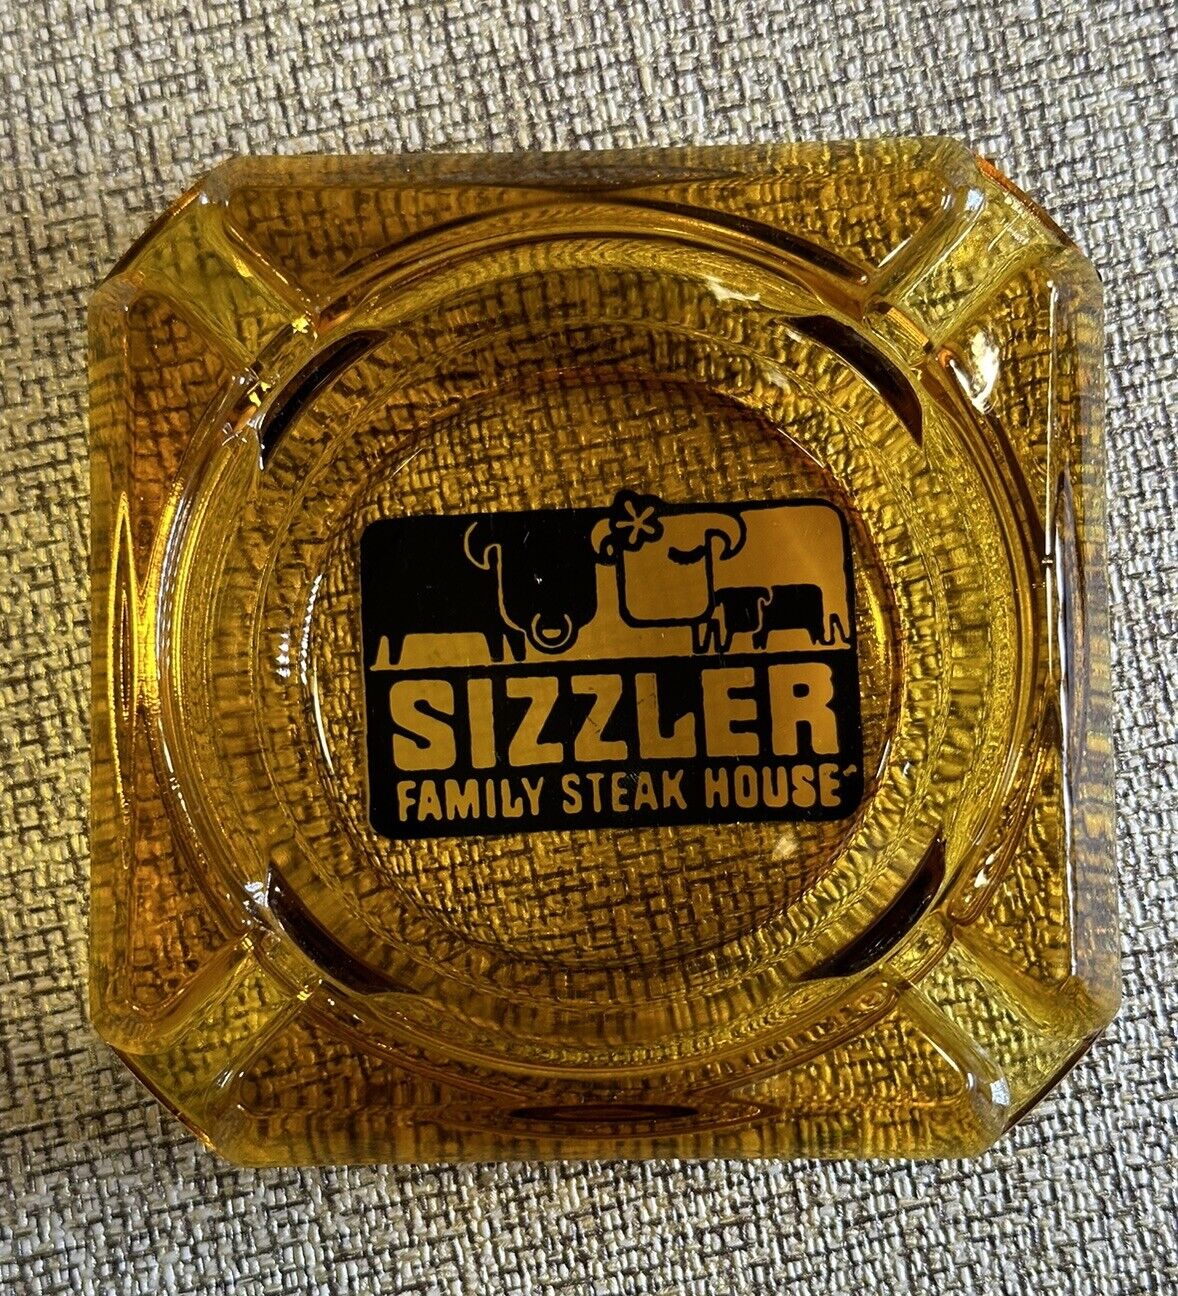 Vintage Sizzler Family Steak House Restaurant Yellow Glass Ashtray Amber